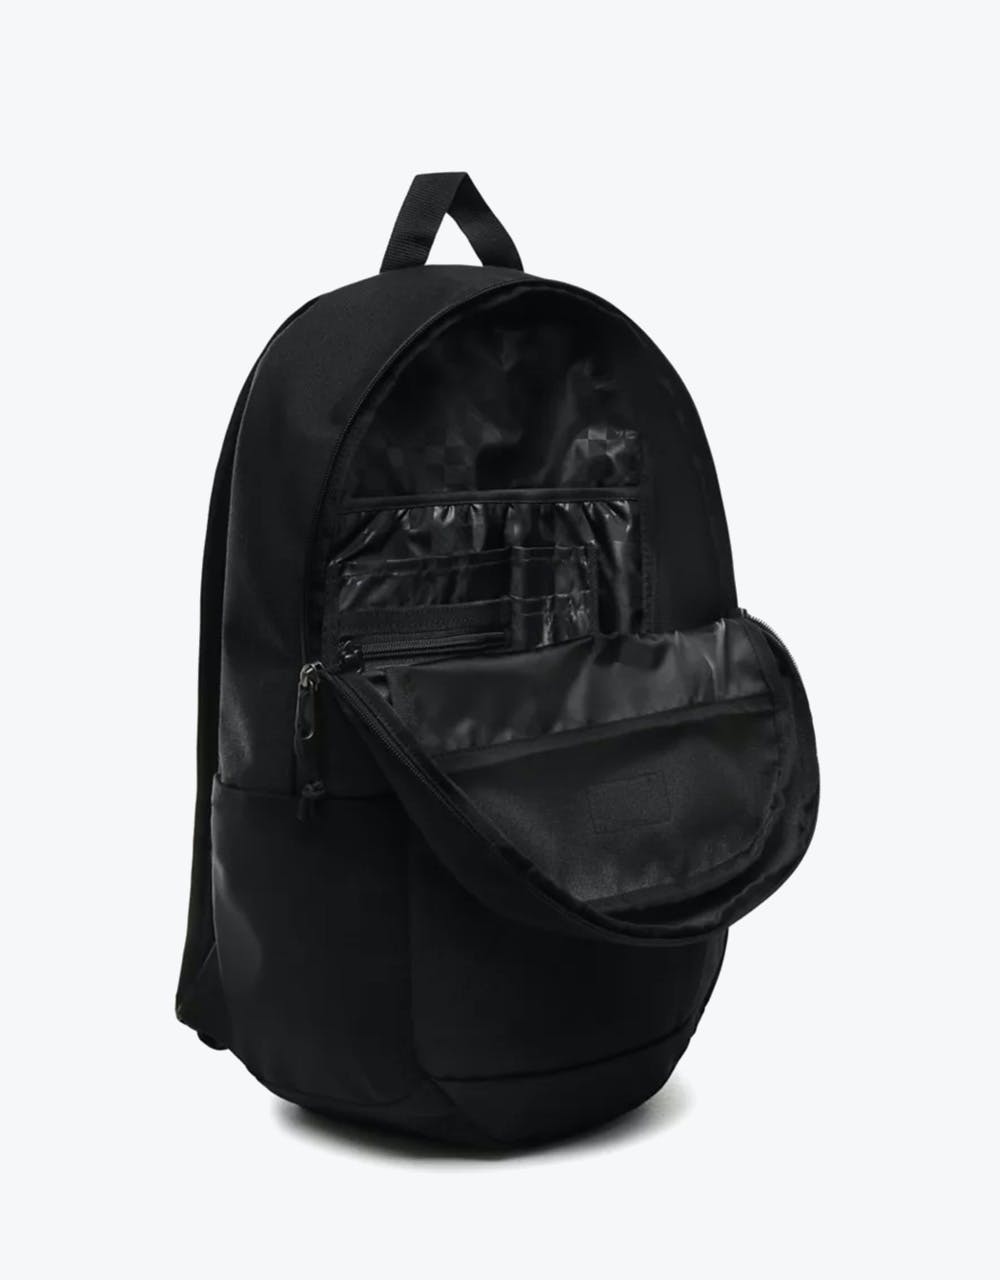 Vans Disorder Backpack - Black